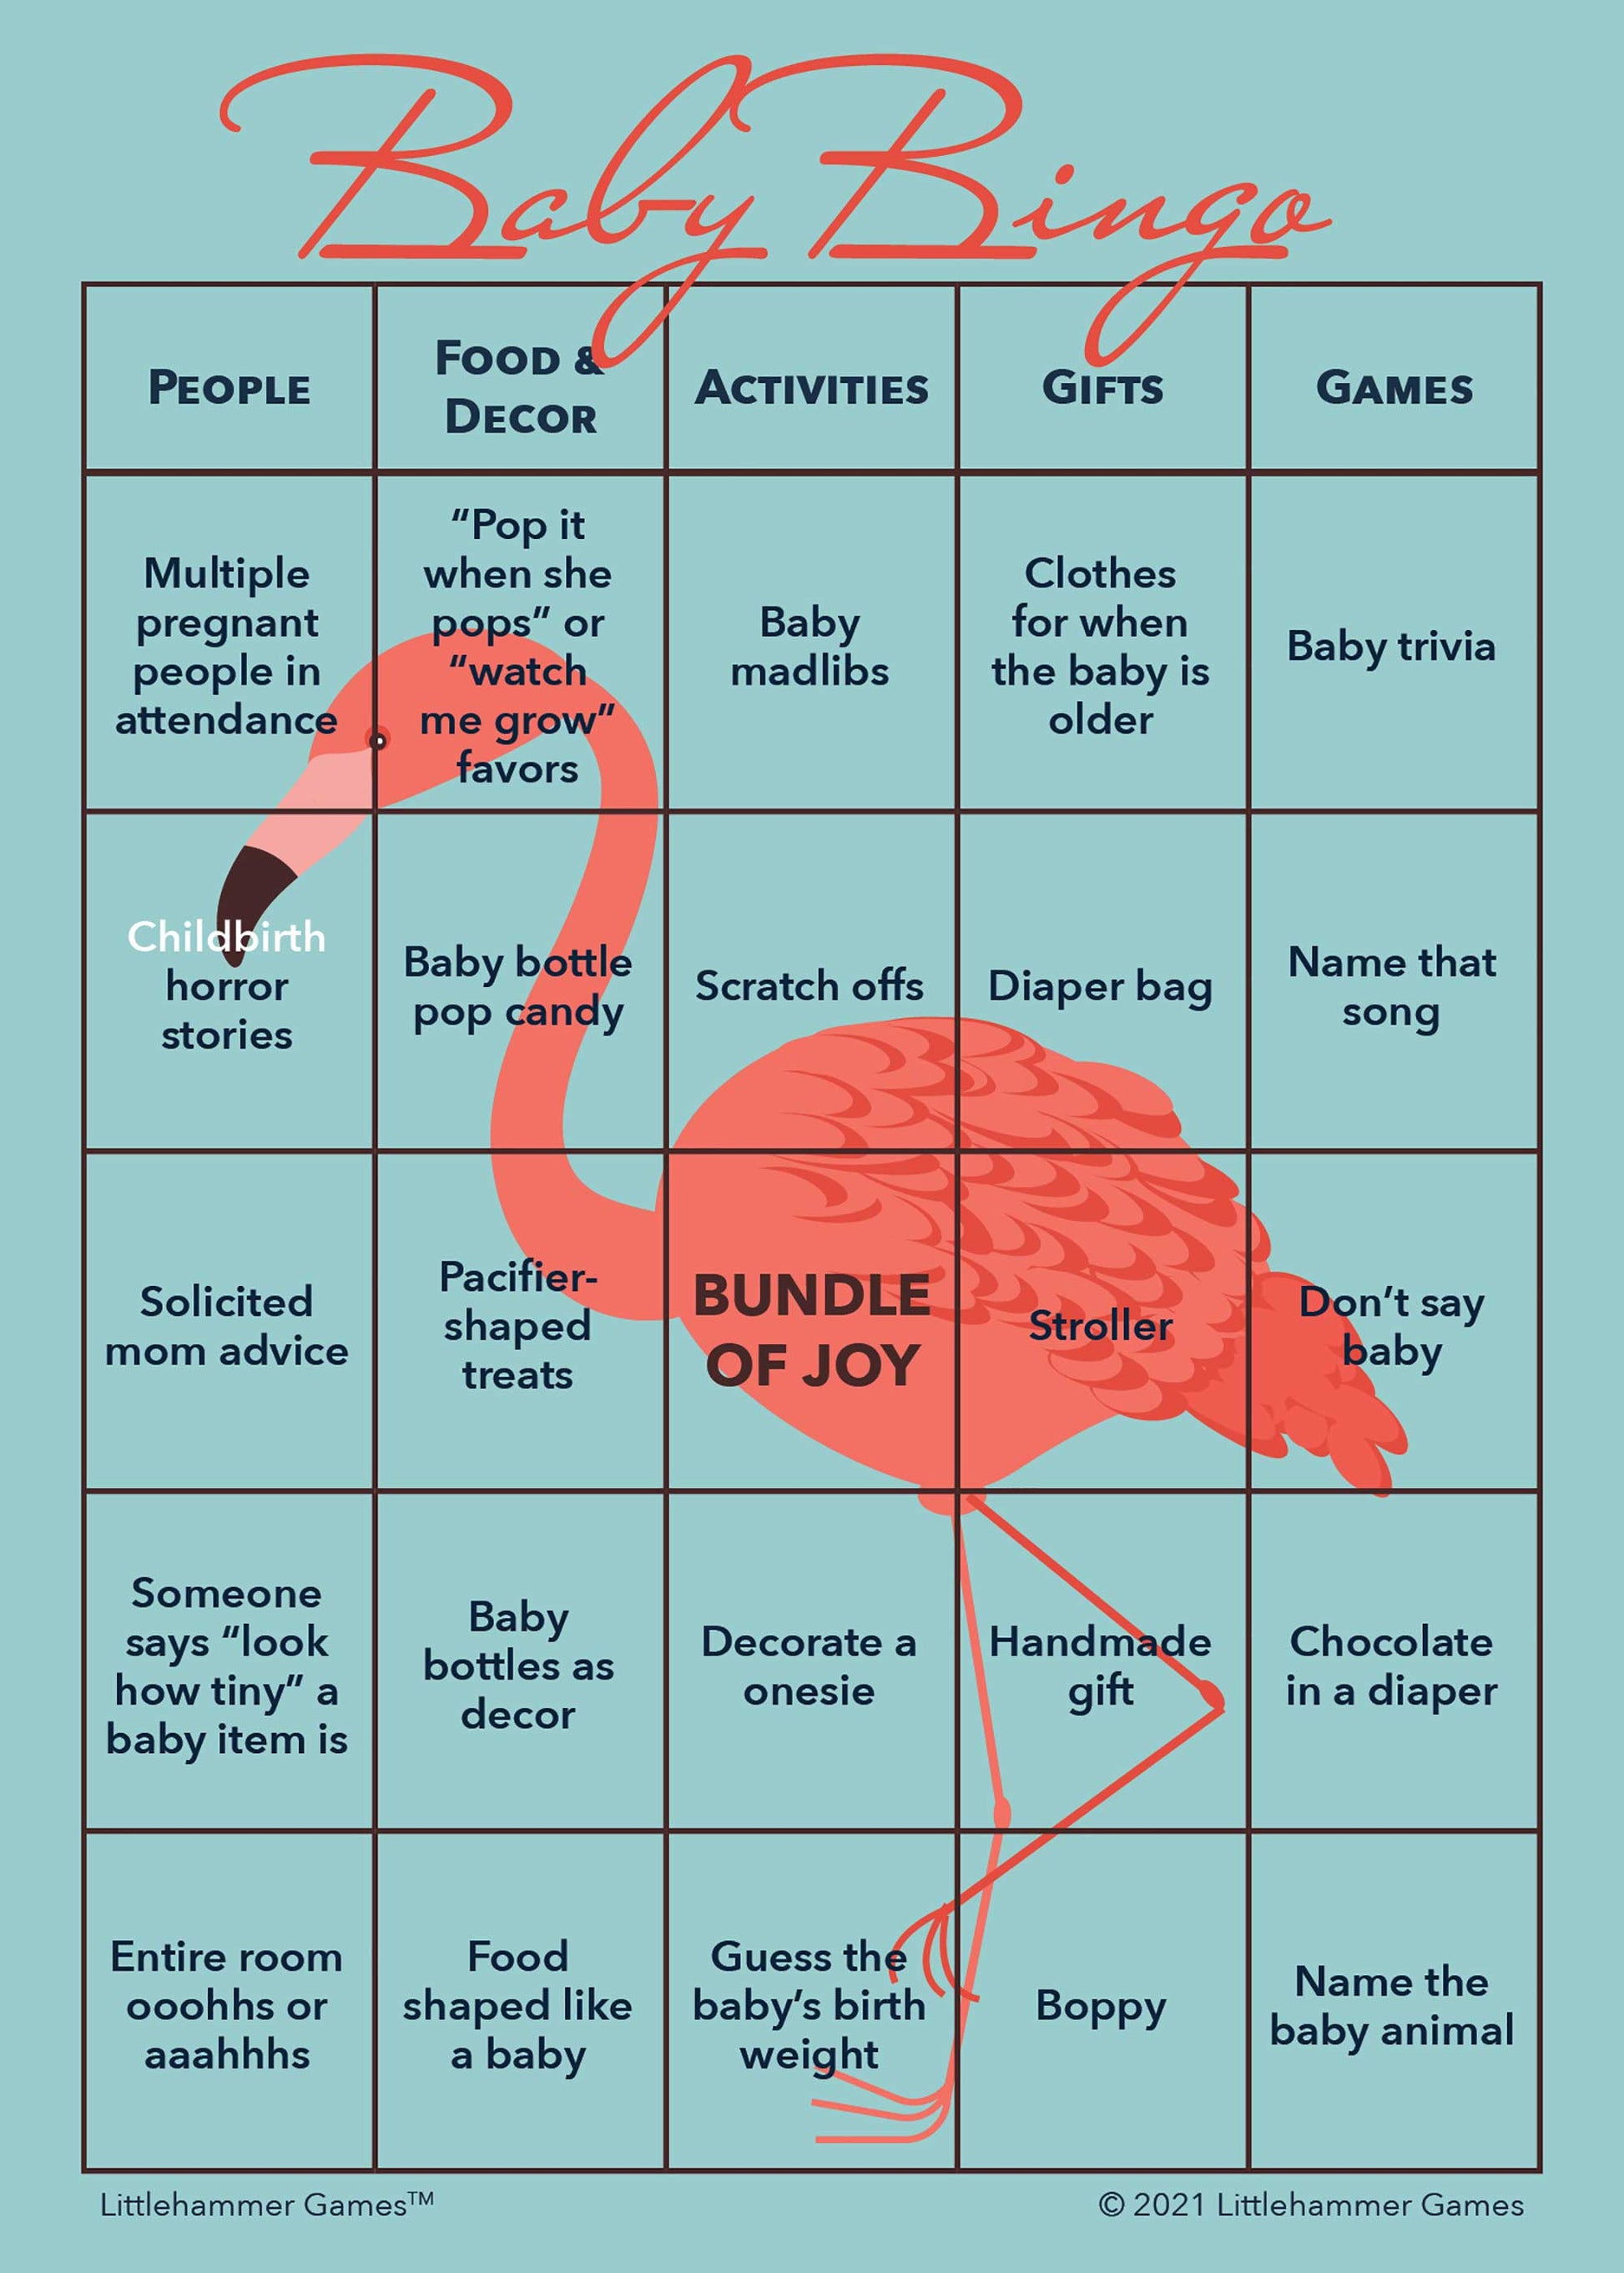 Baby Bingo game card on a flamingo background